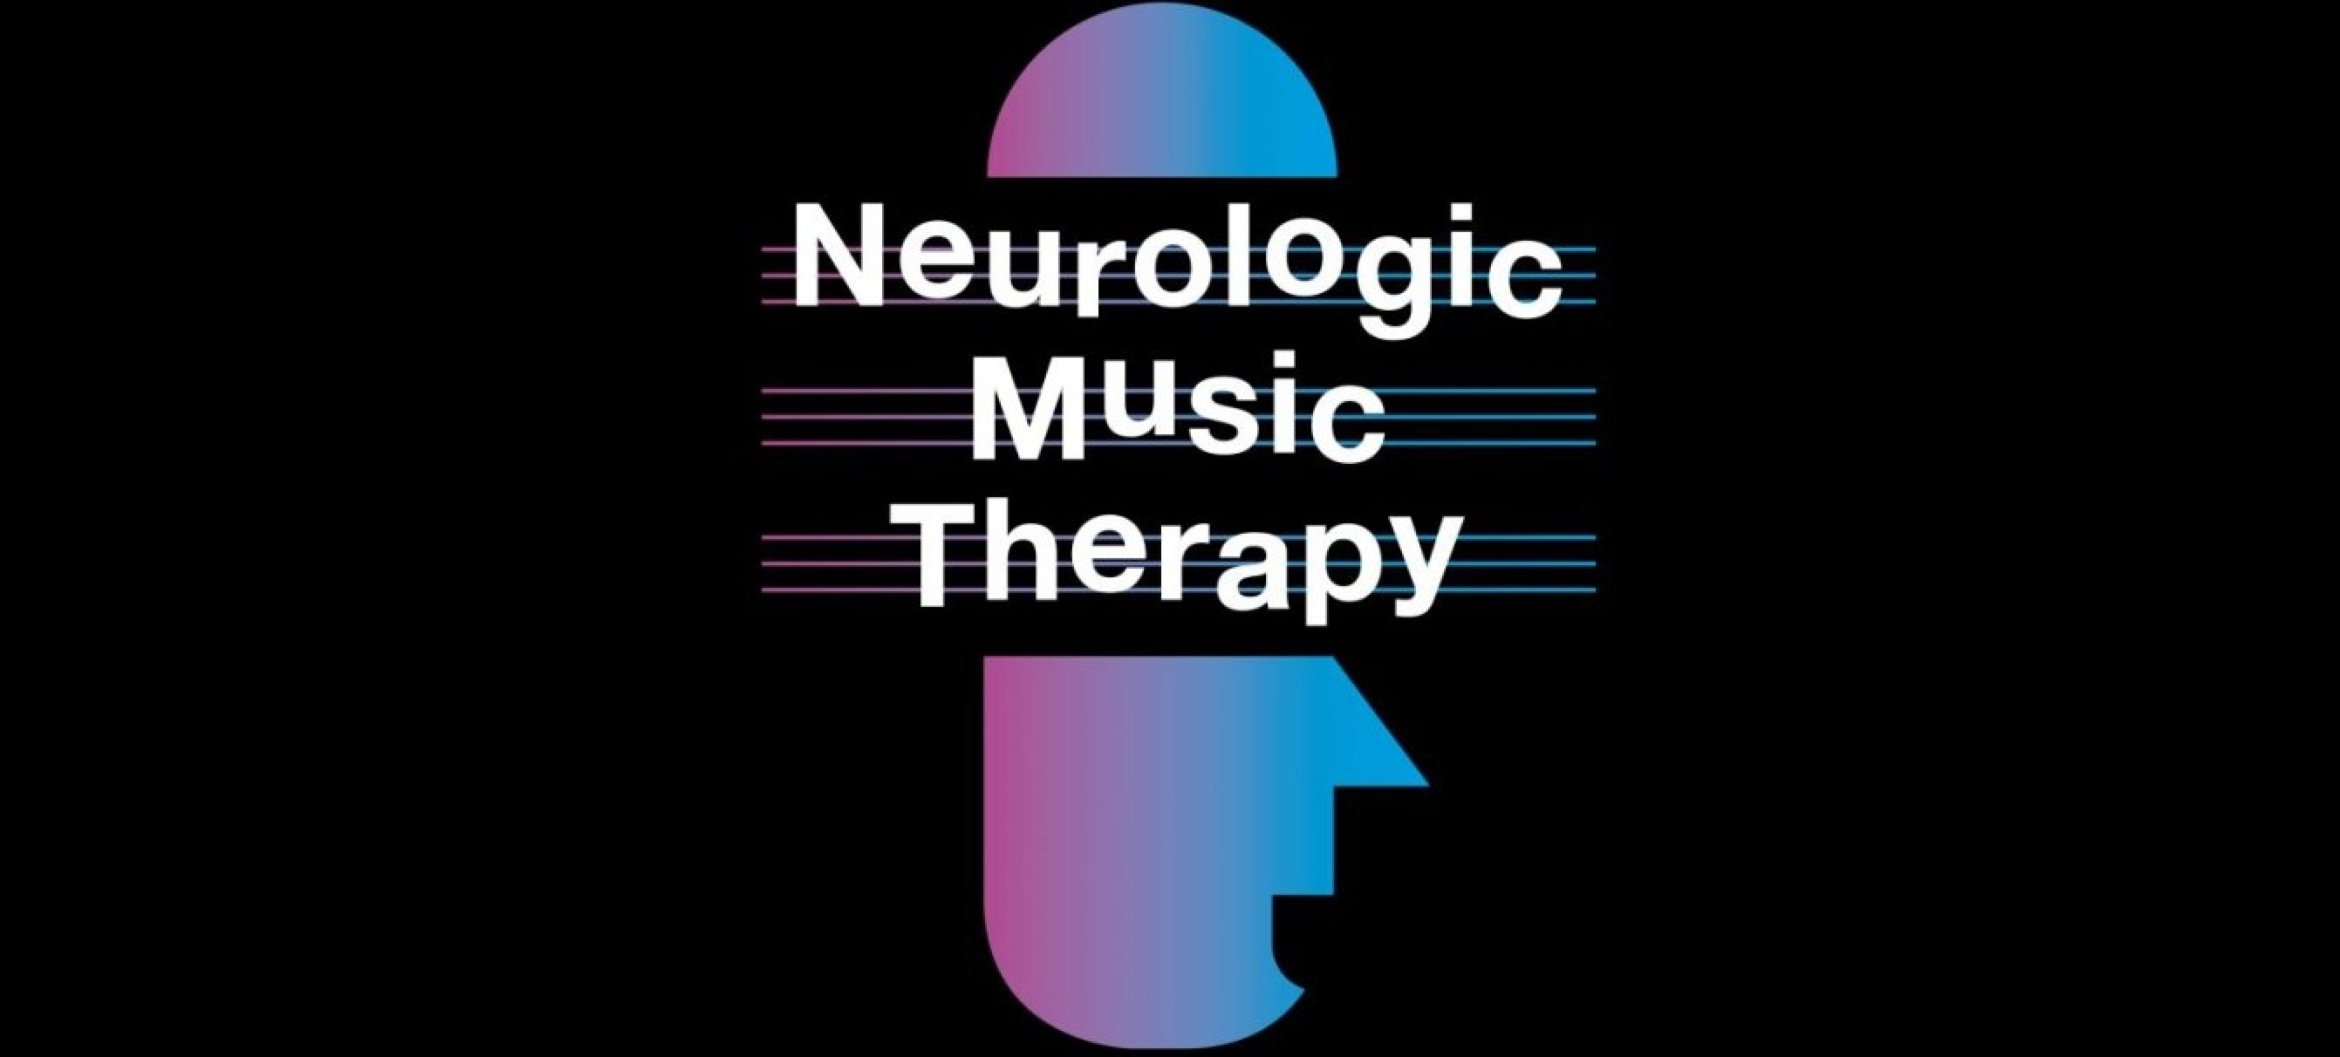 Neurologic Music Therapy  Fellowship training